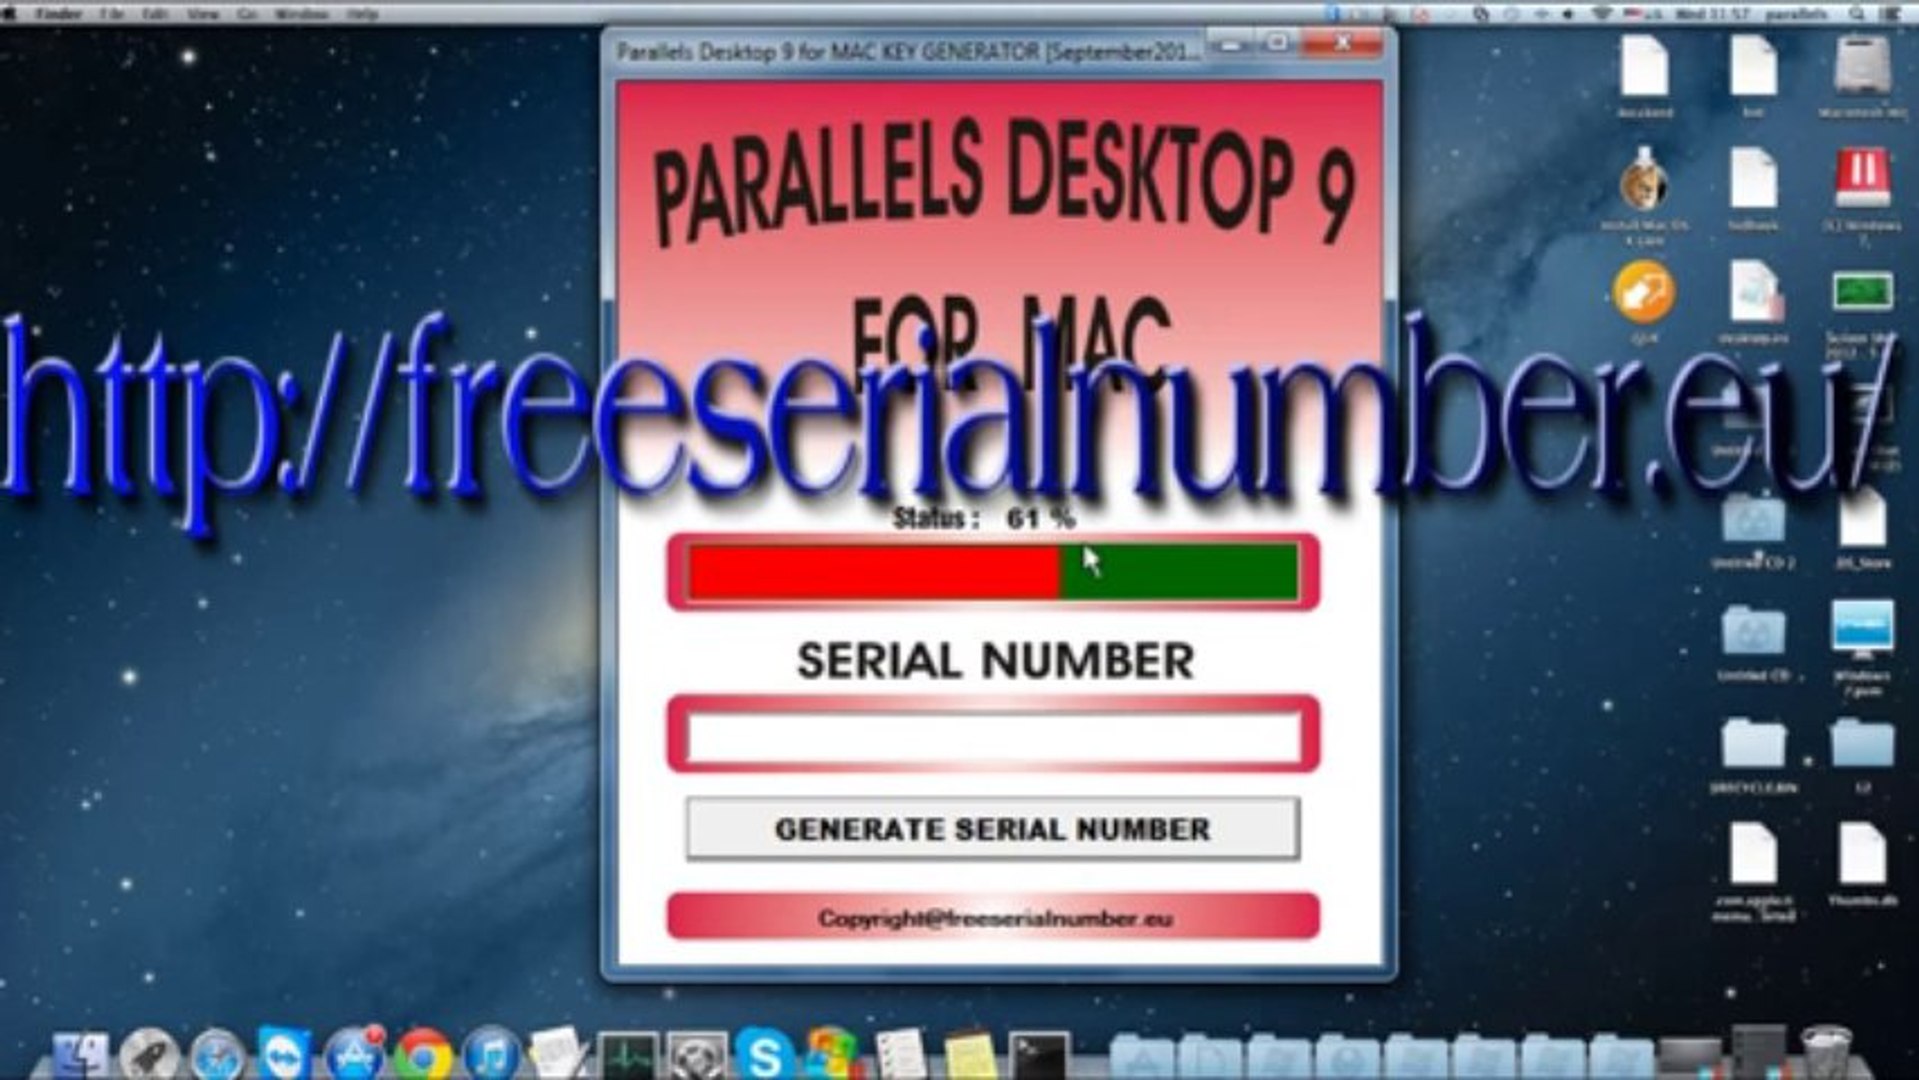 Parallels 9 activation key generator mac free